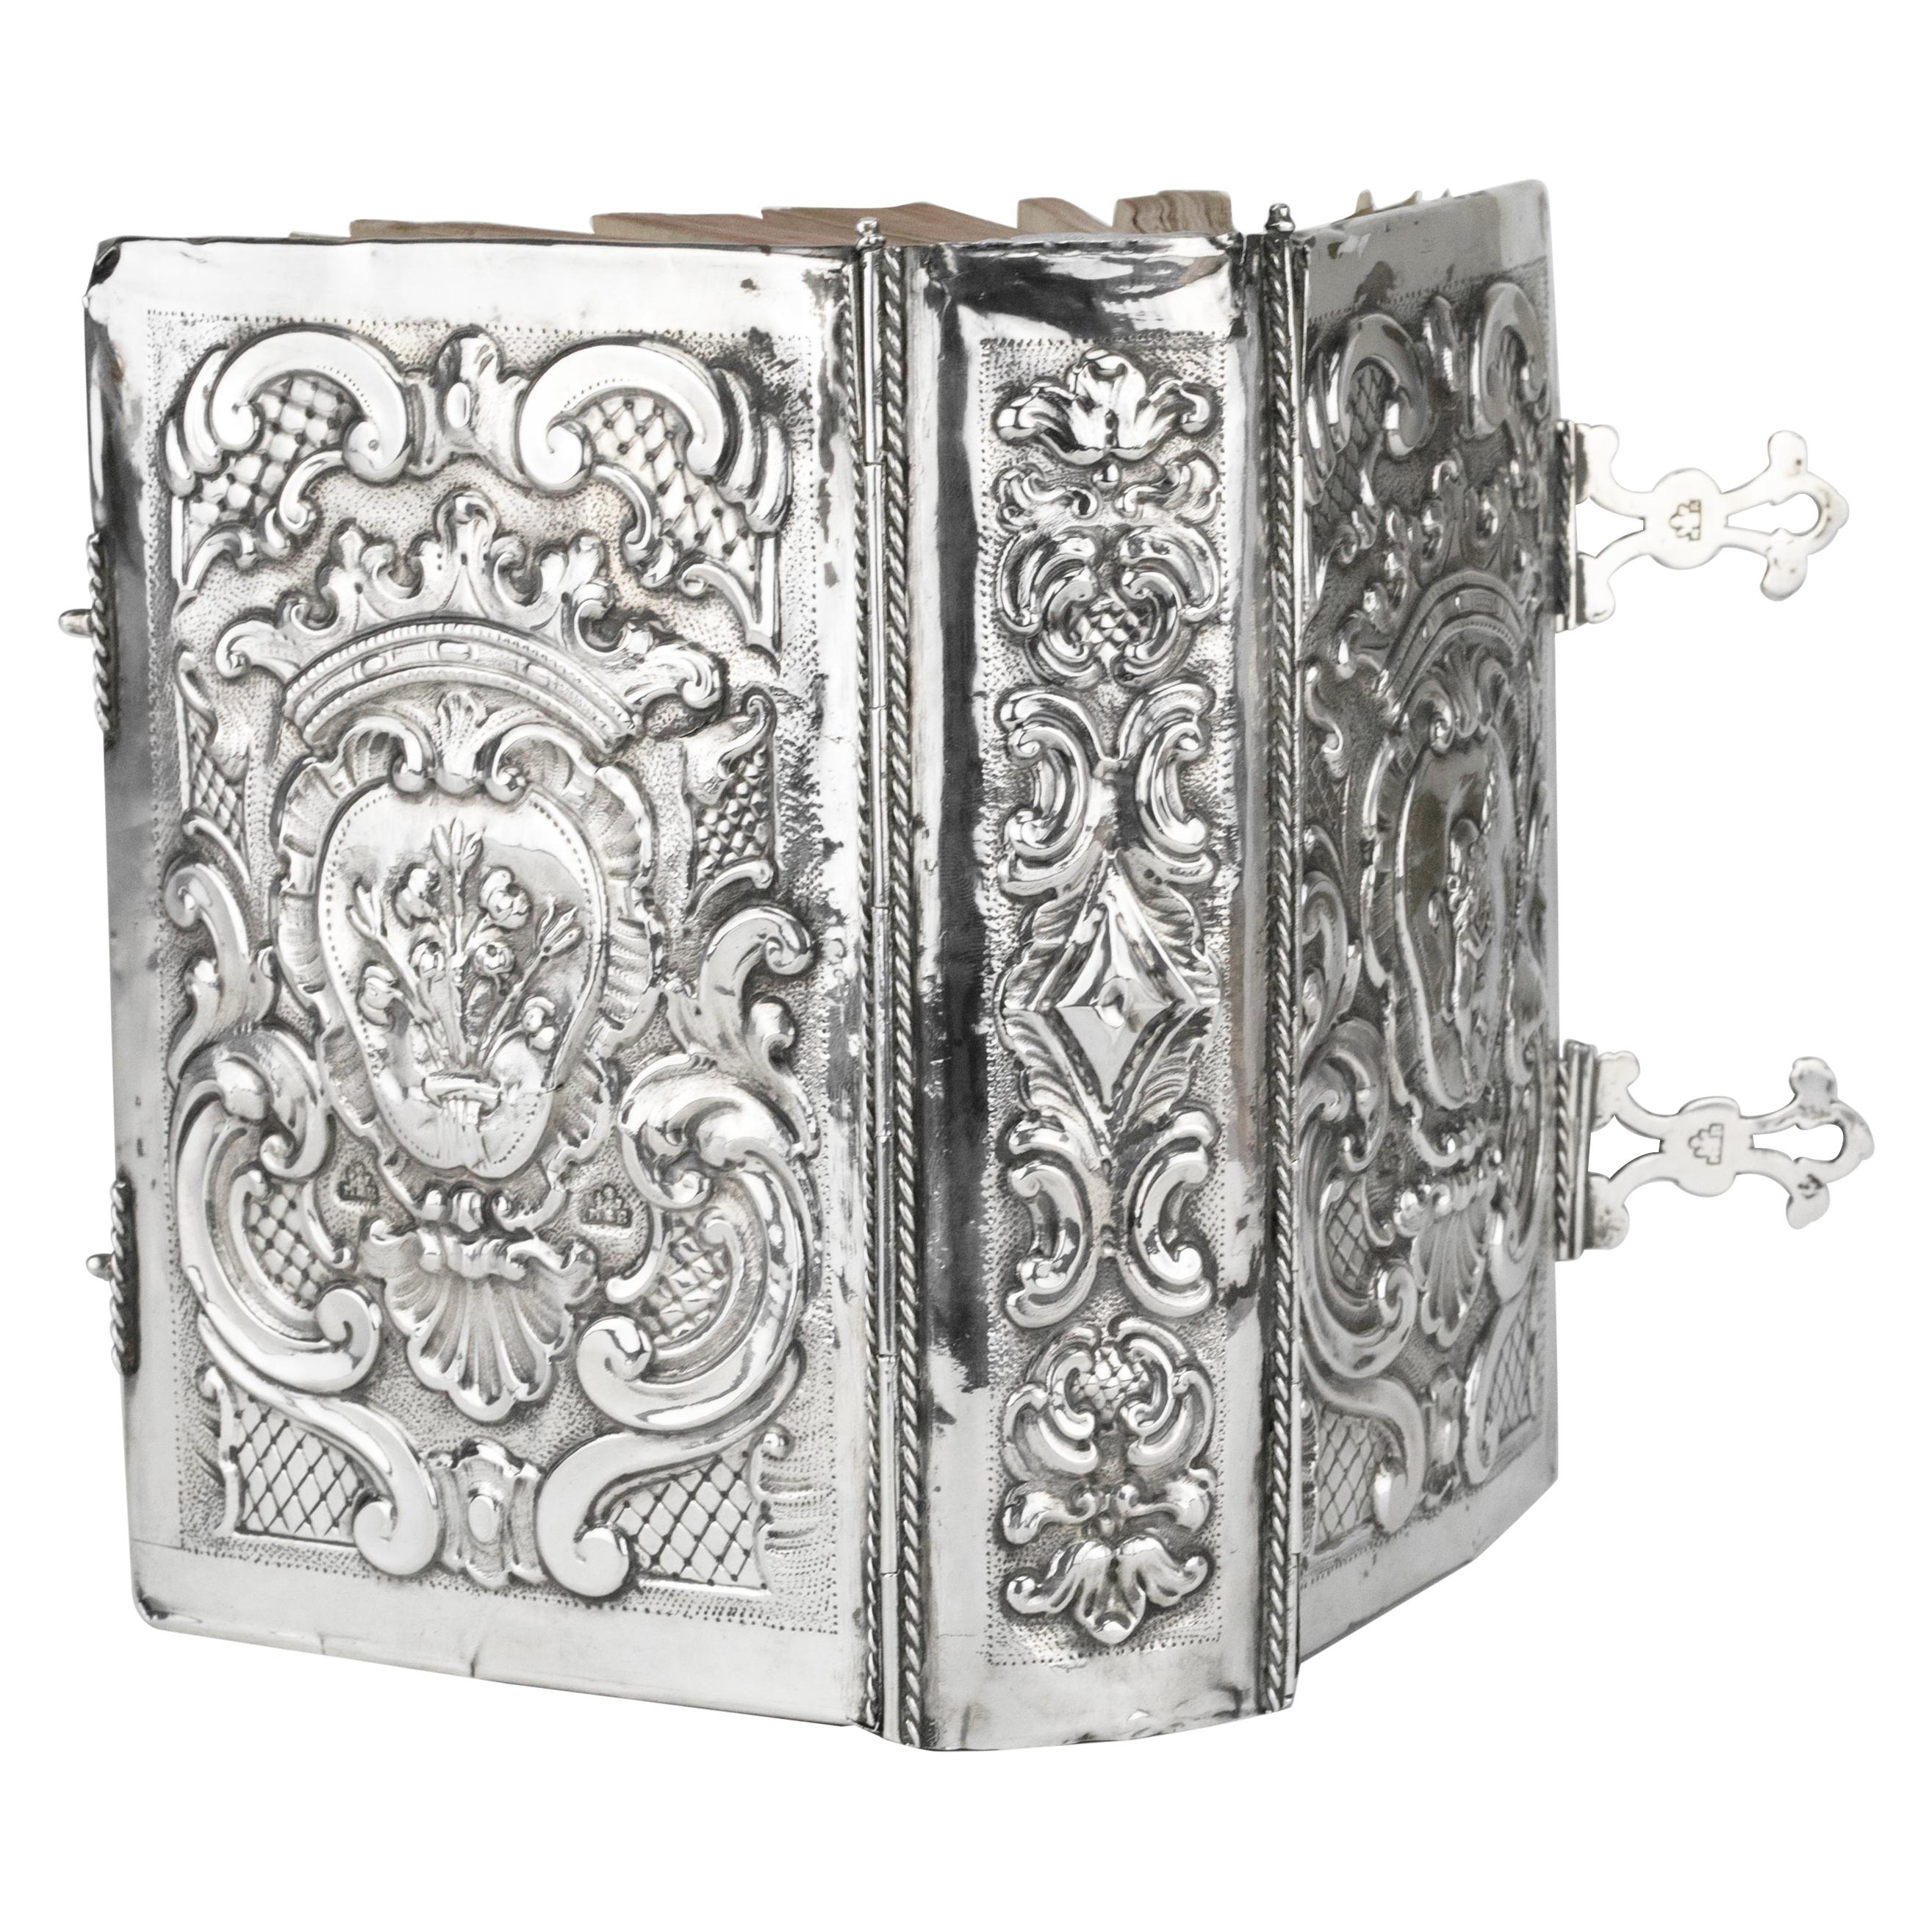 Late 18th Century Italian Silver Book Binding by Marc'antonio Belotto of Padua